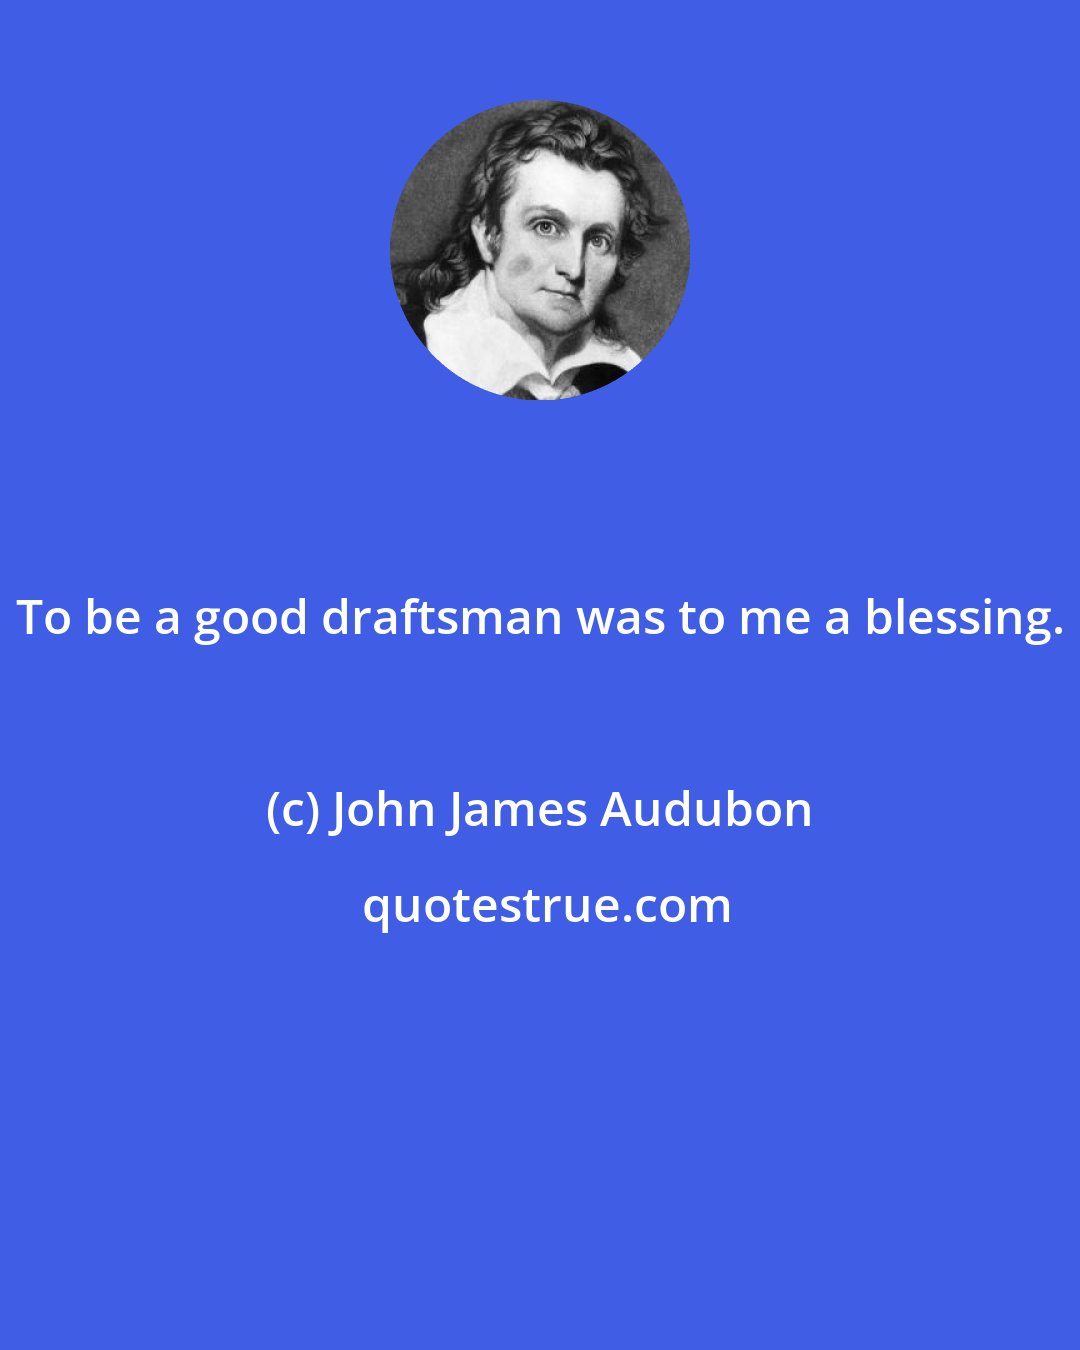 John James Audubon: To be a good draftsman was to me a blessing.